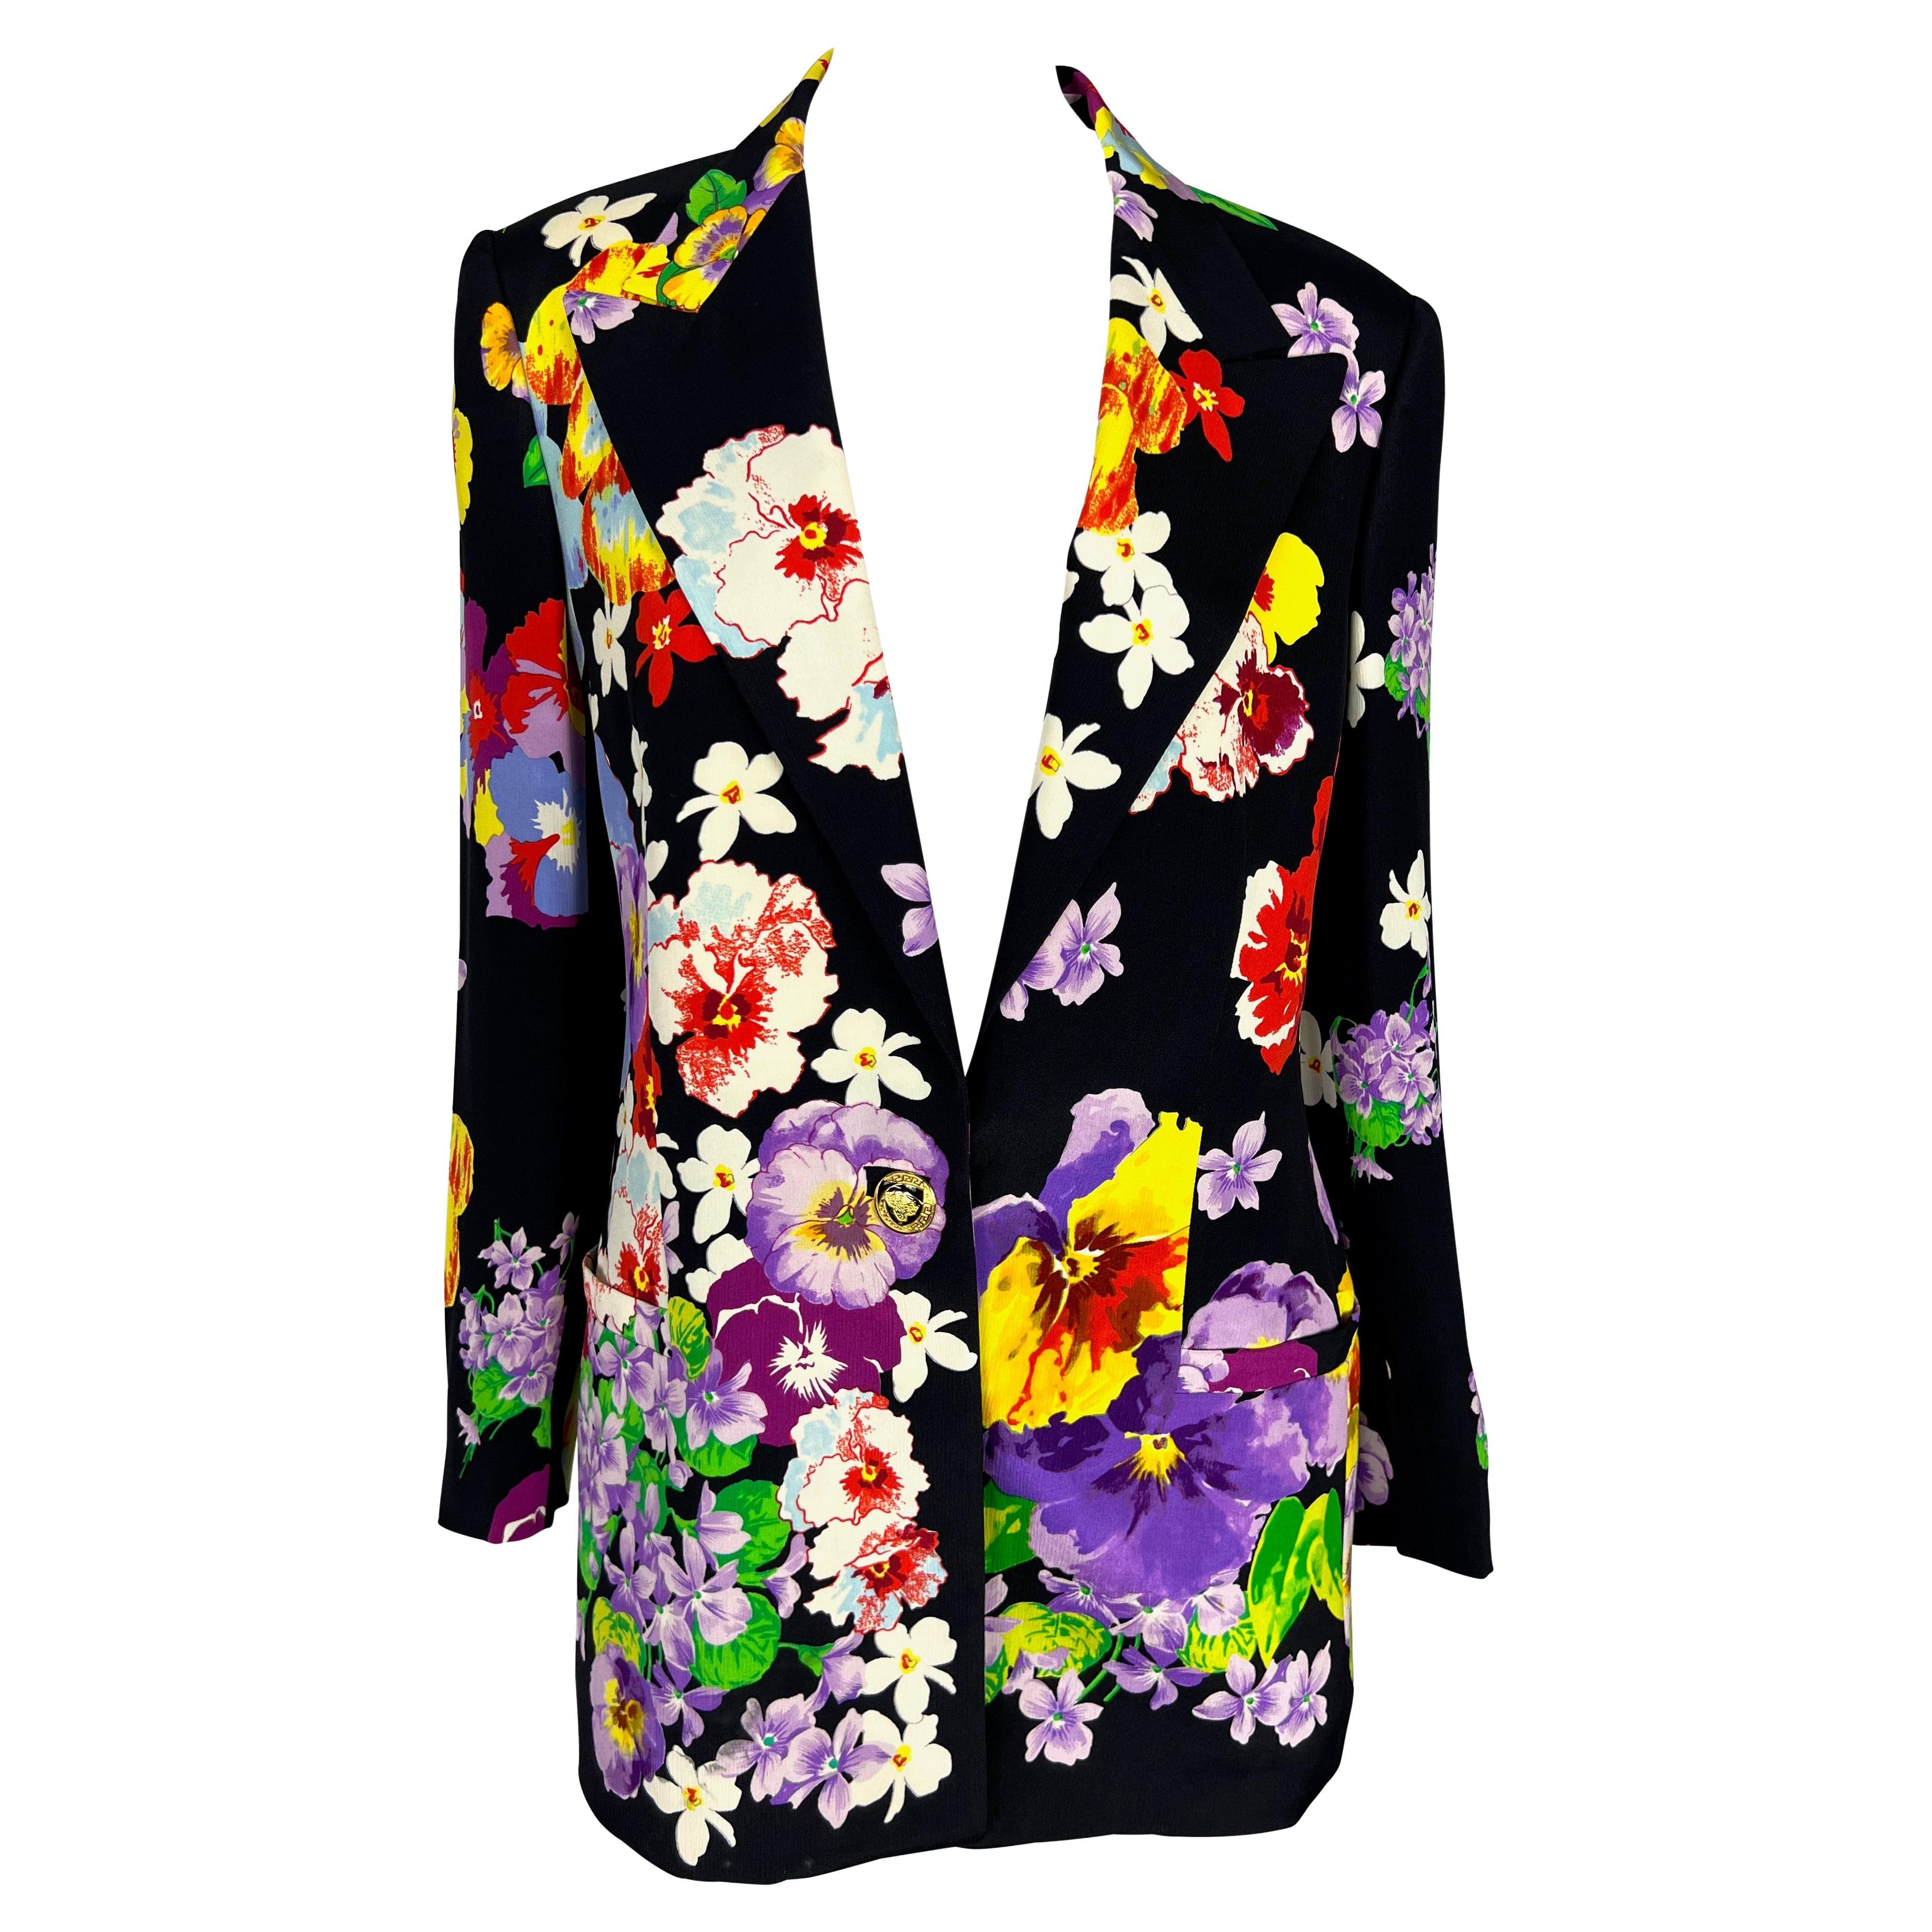 S/S 1994 Gianni Versace Couture Floral Print Black Silk Blazer Jacket